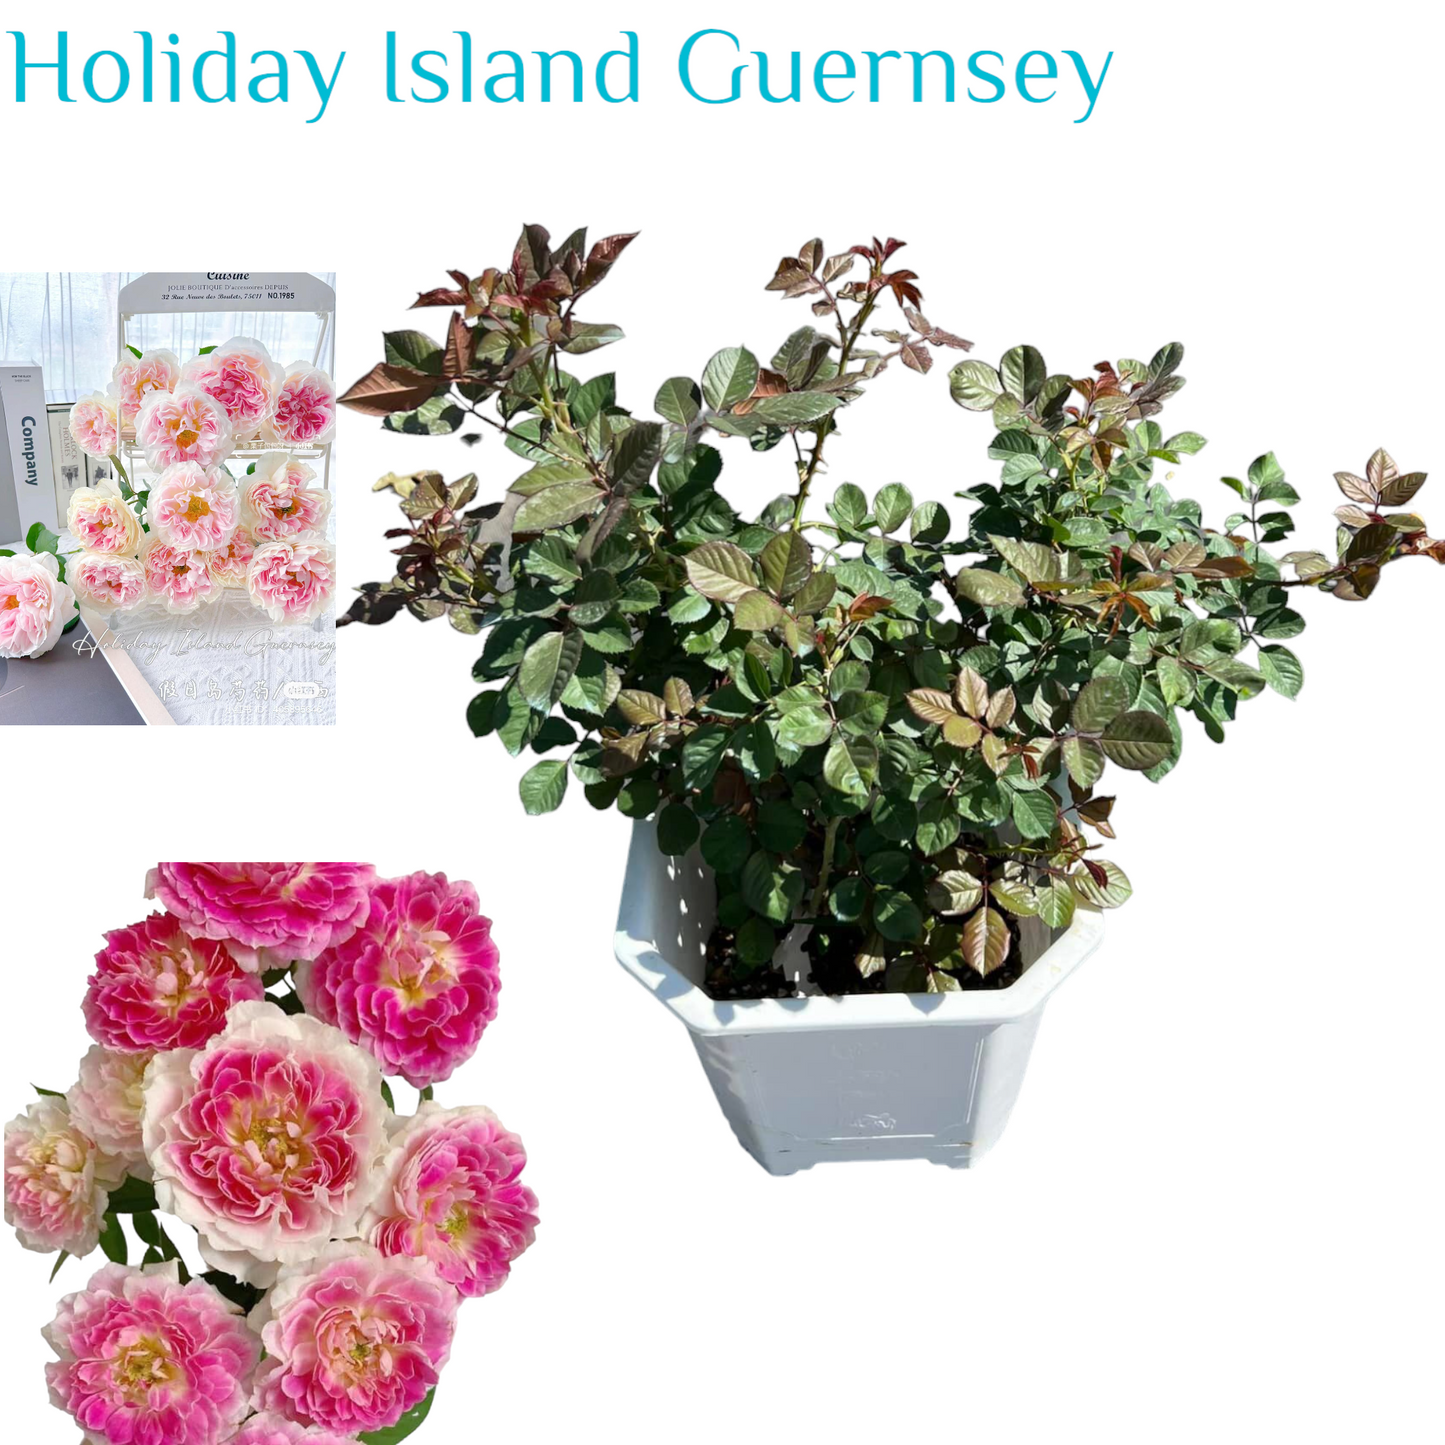 Holiday Island Guernsey